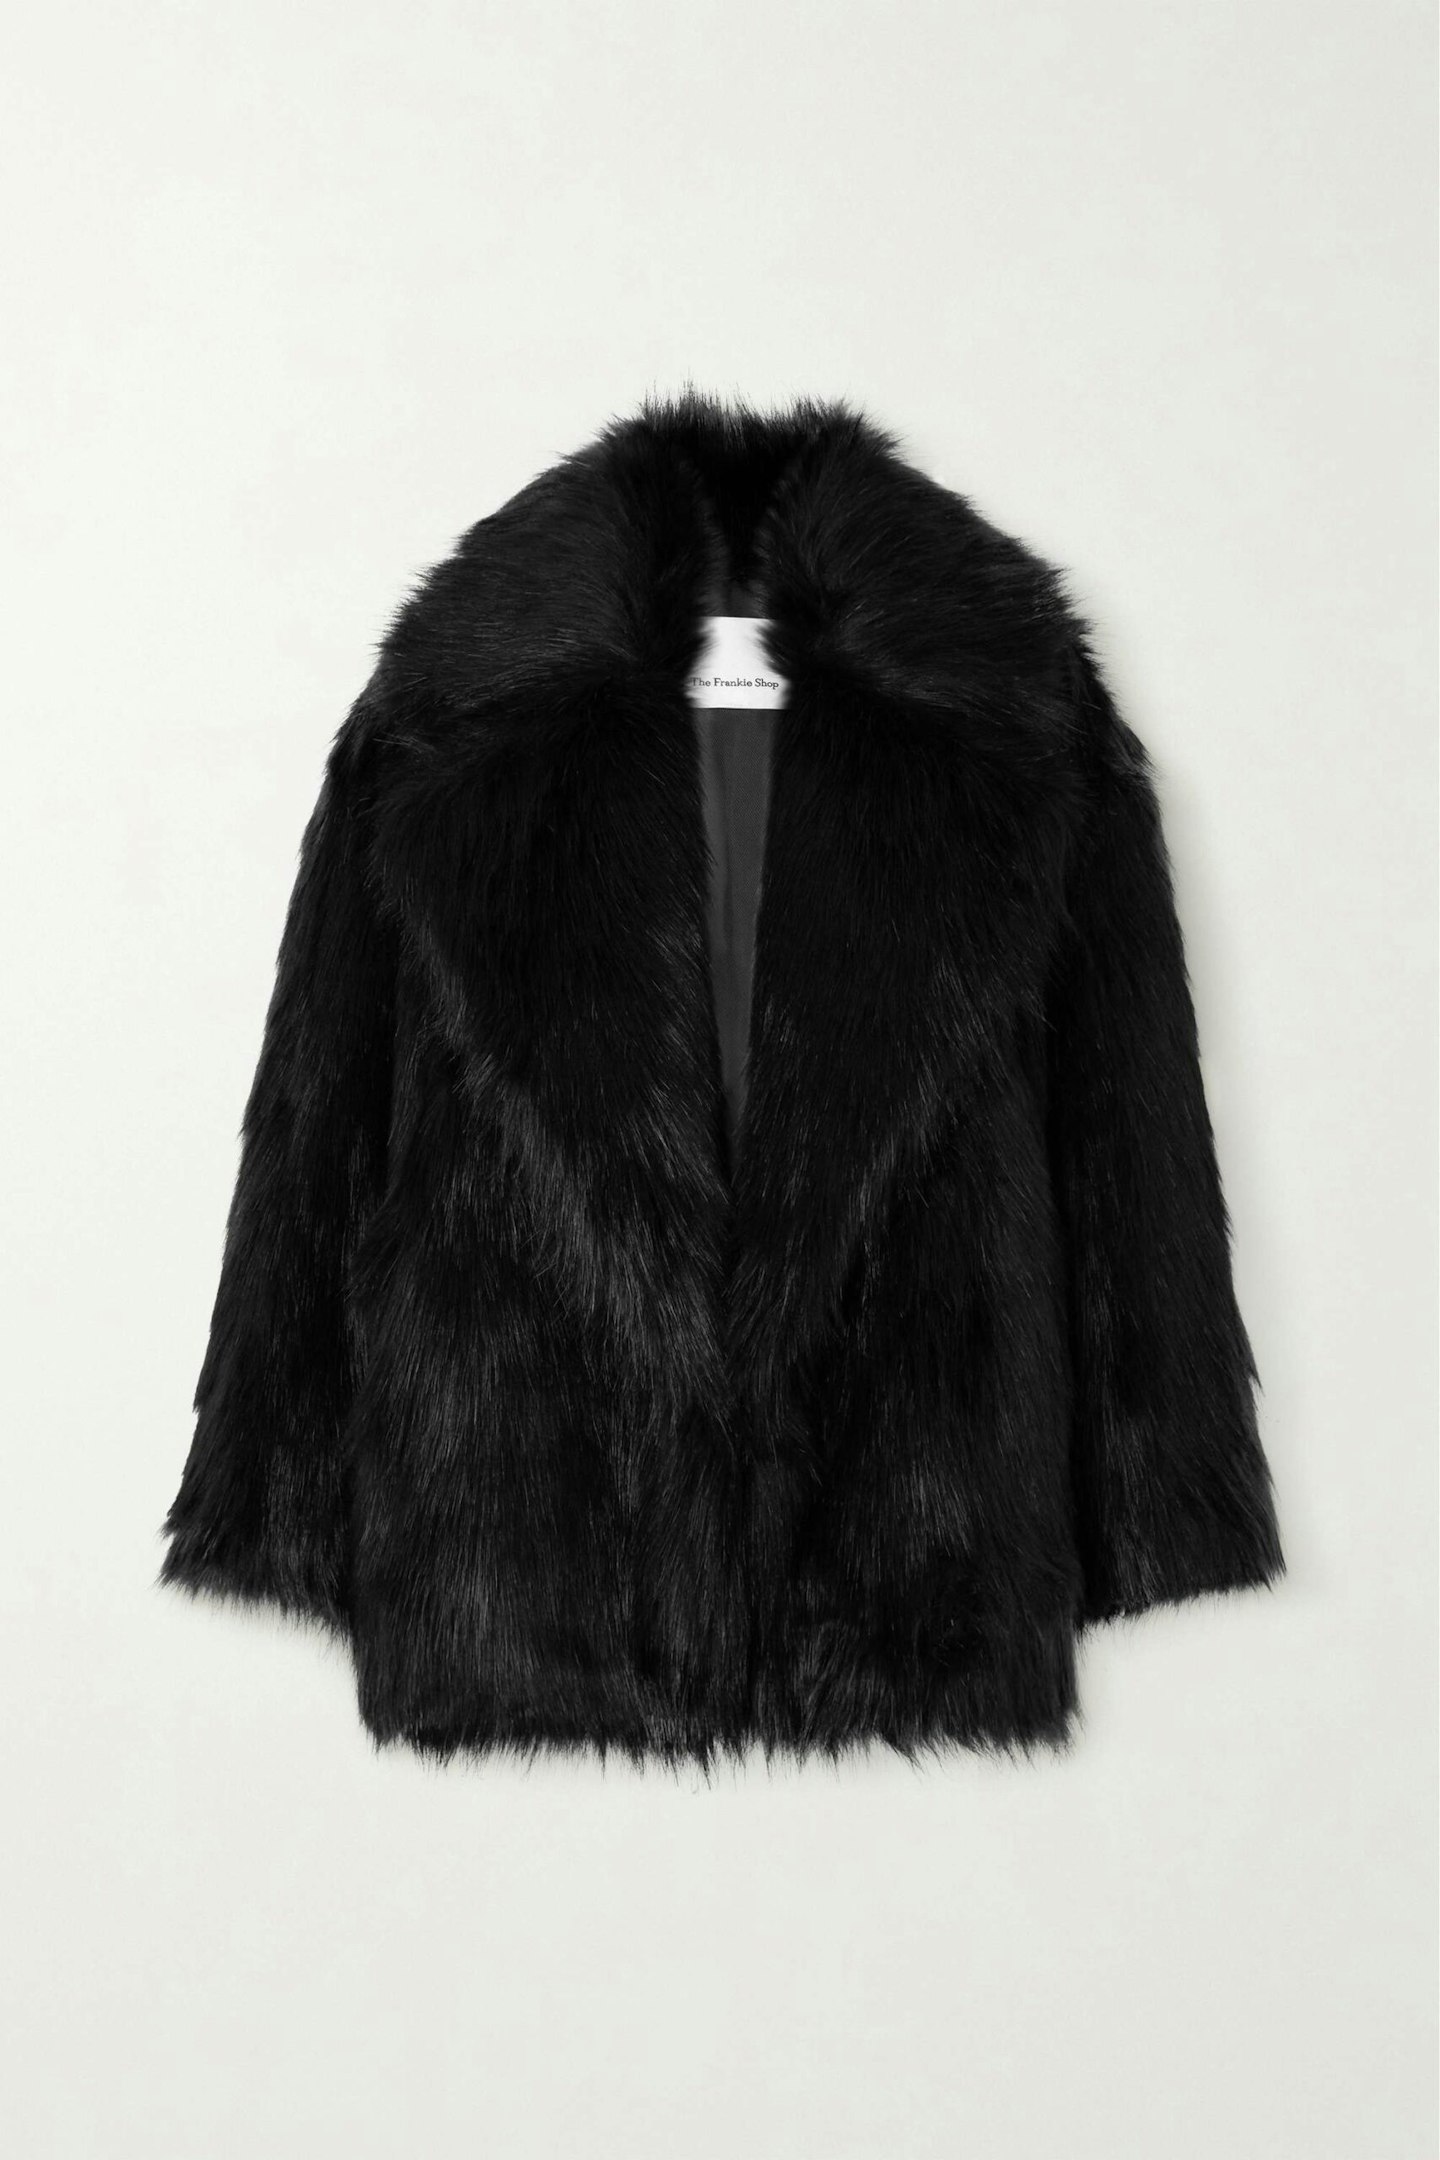 The Frankie Shop faux fur jacket selena gomez